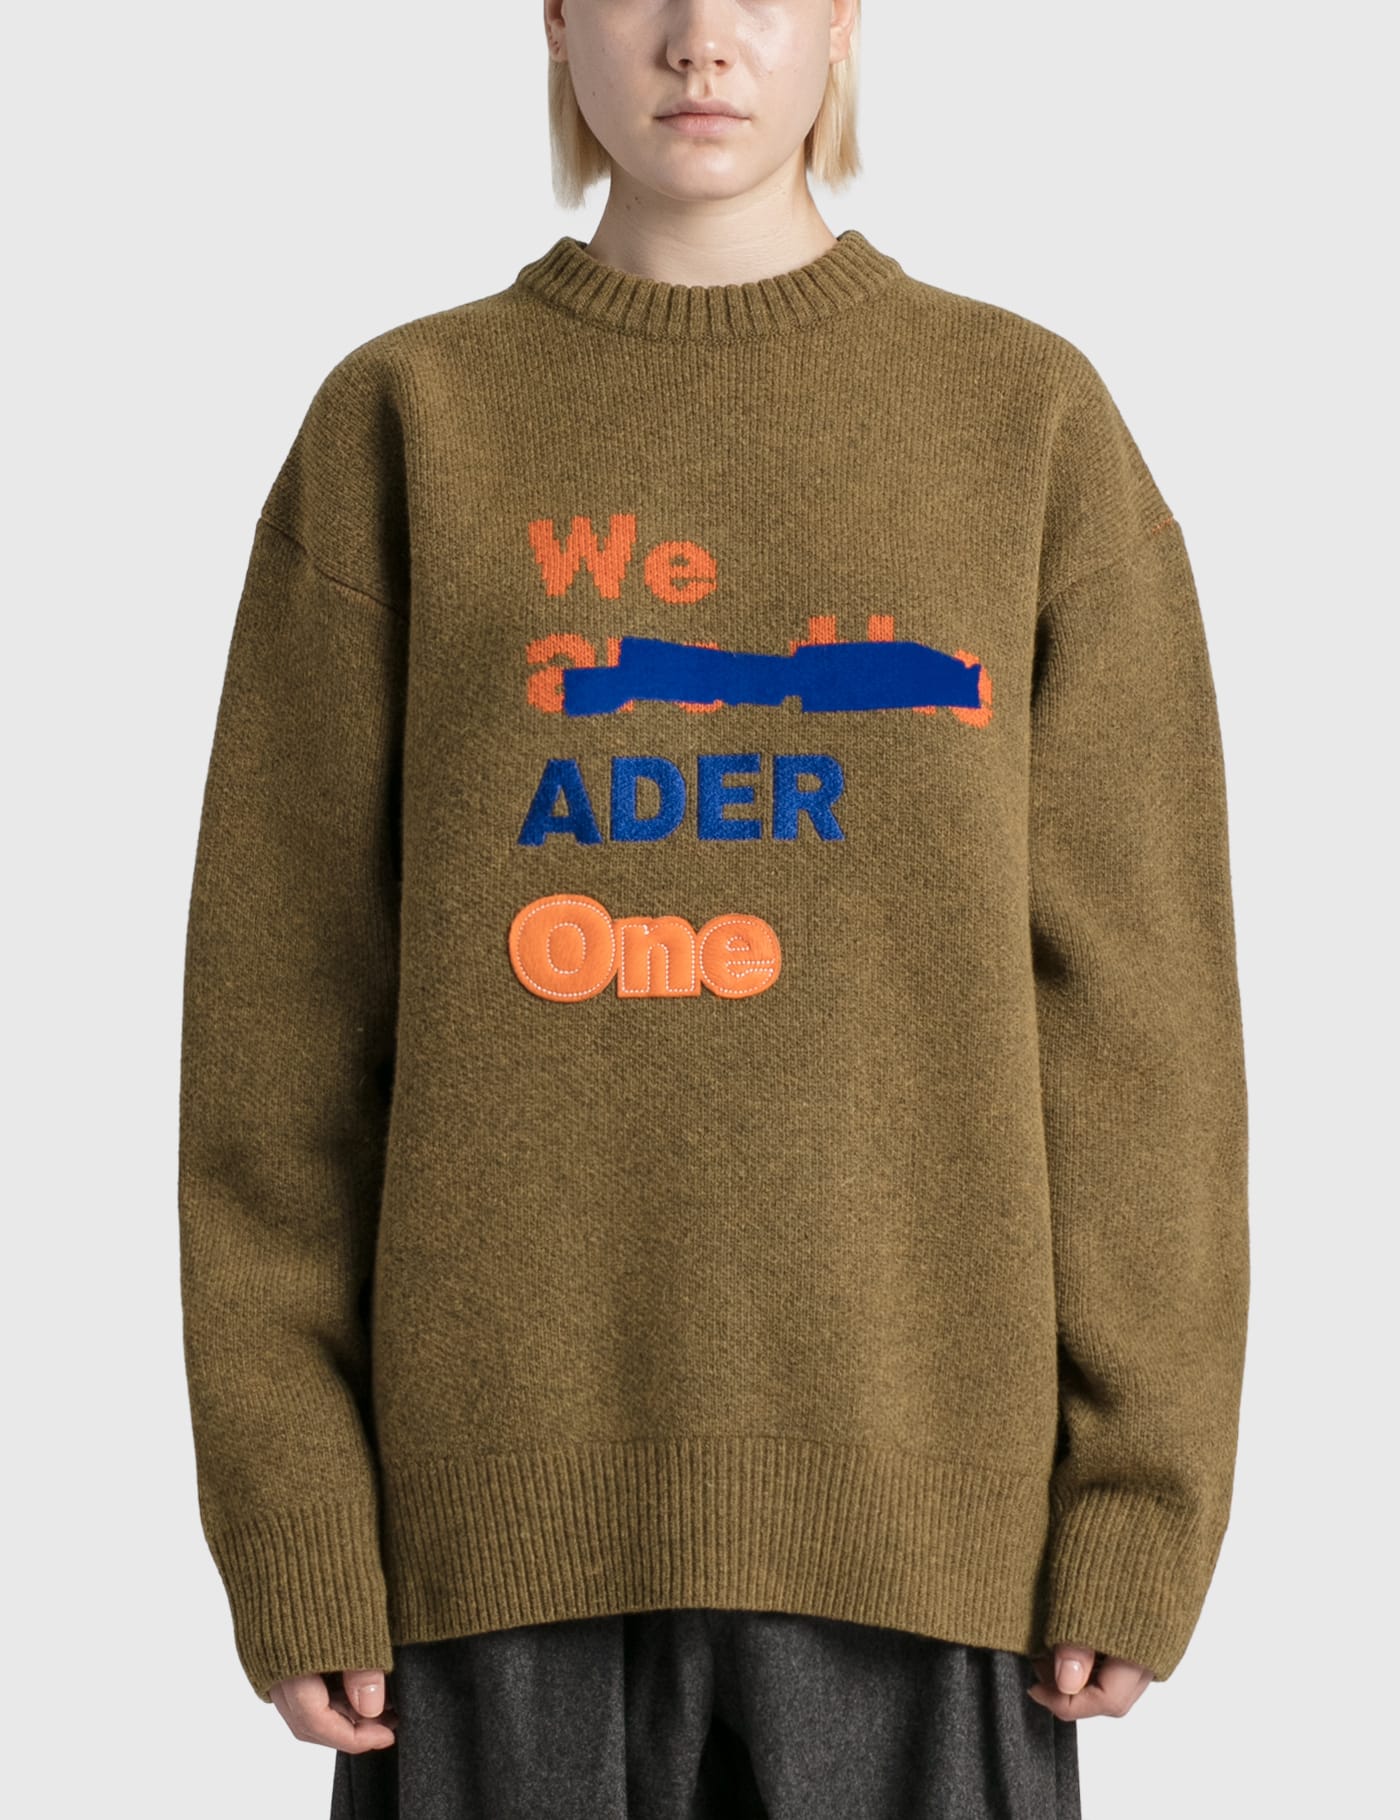 Ader Error - ニット セーター | HBX - ハイプビースト(Hypebeast)が